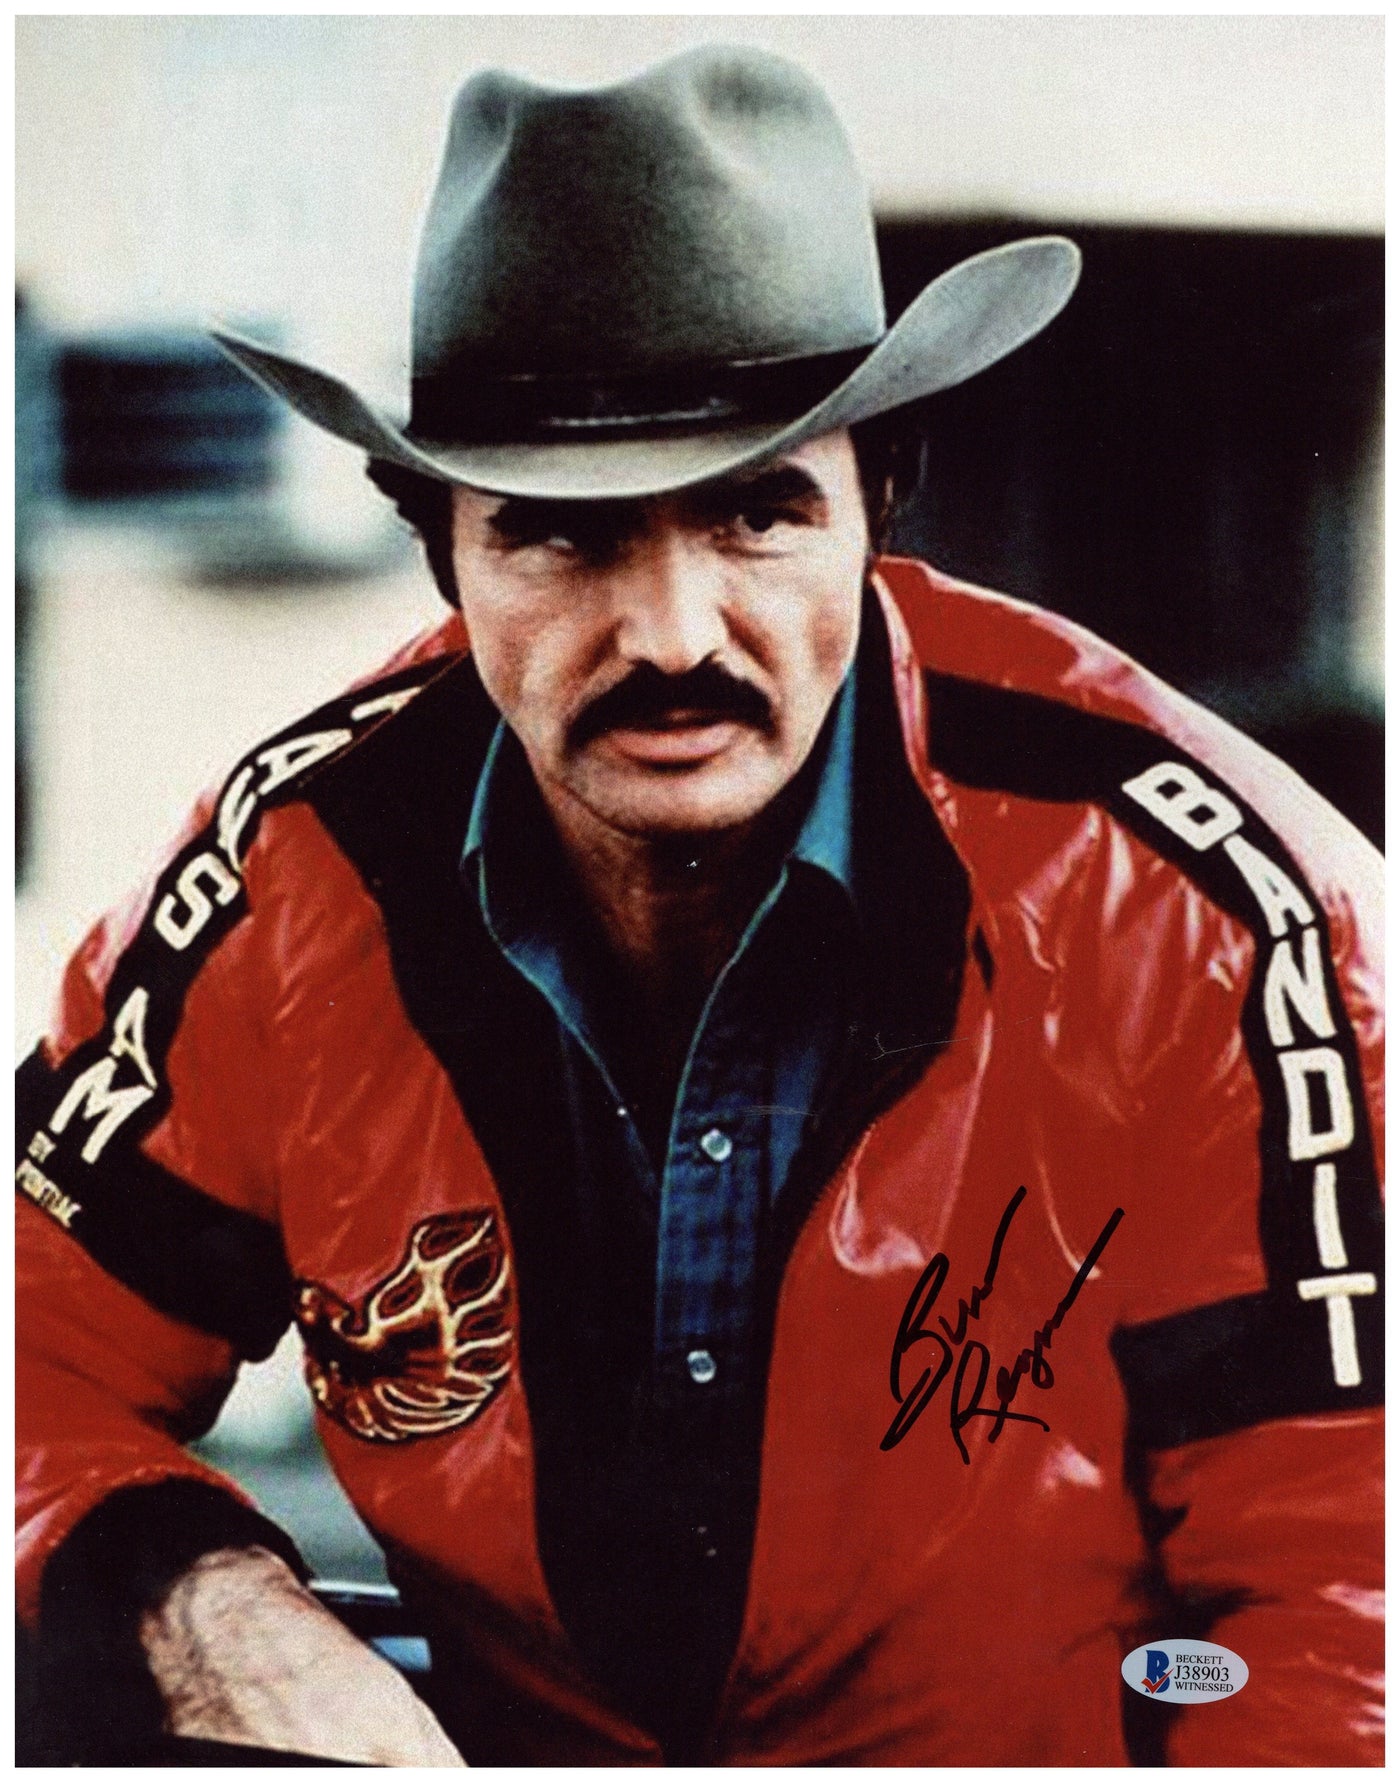 Burt Reynolds Signed 11x14 Photo Smokey and the Bandit Authentic Autographed BAS COA